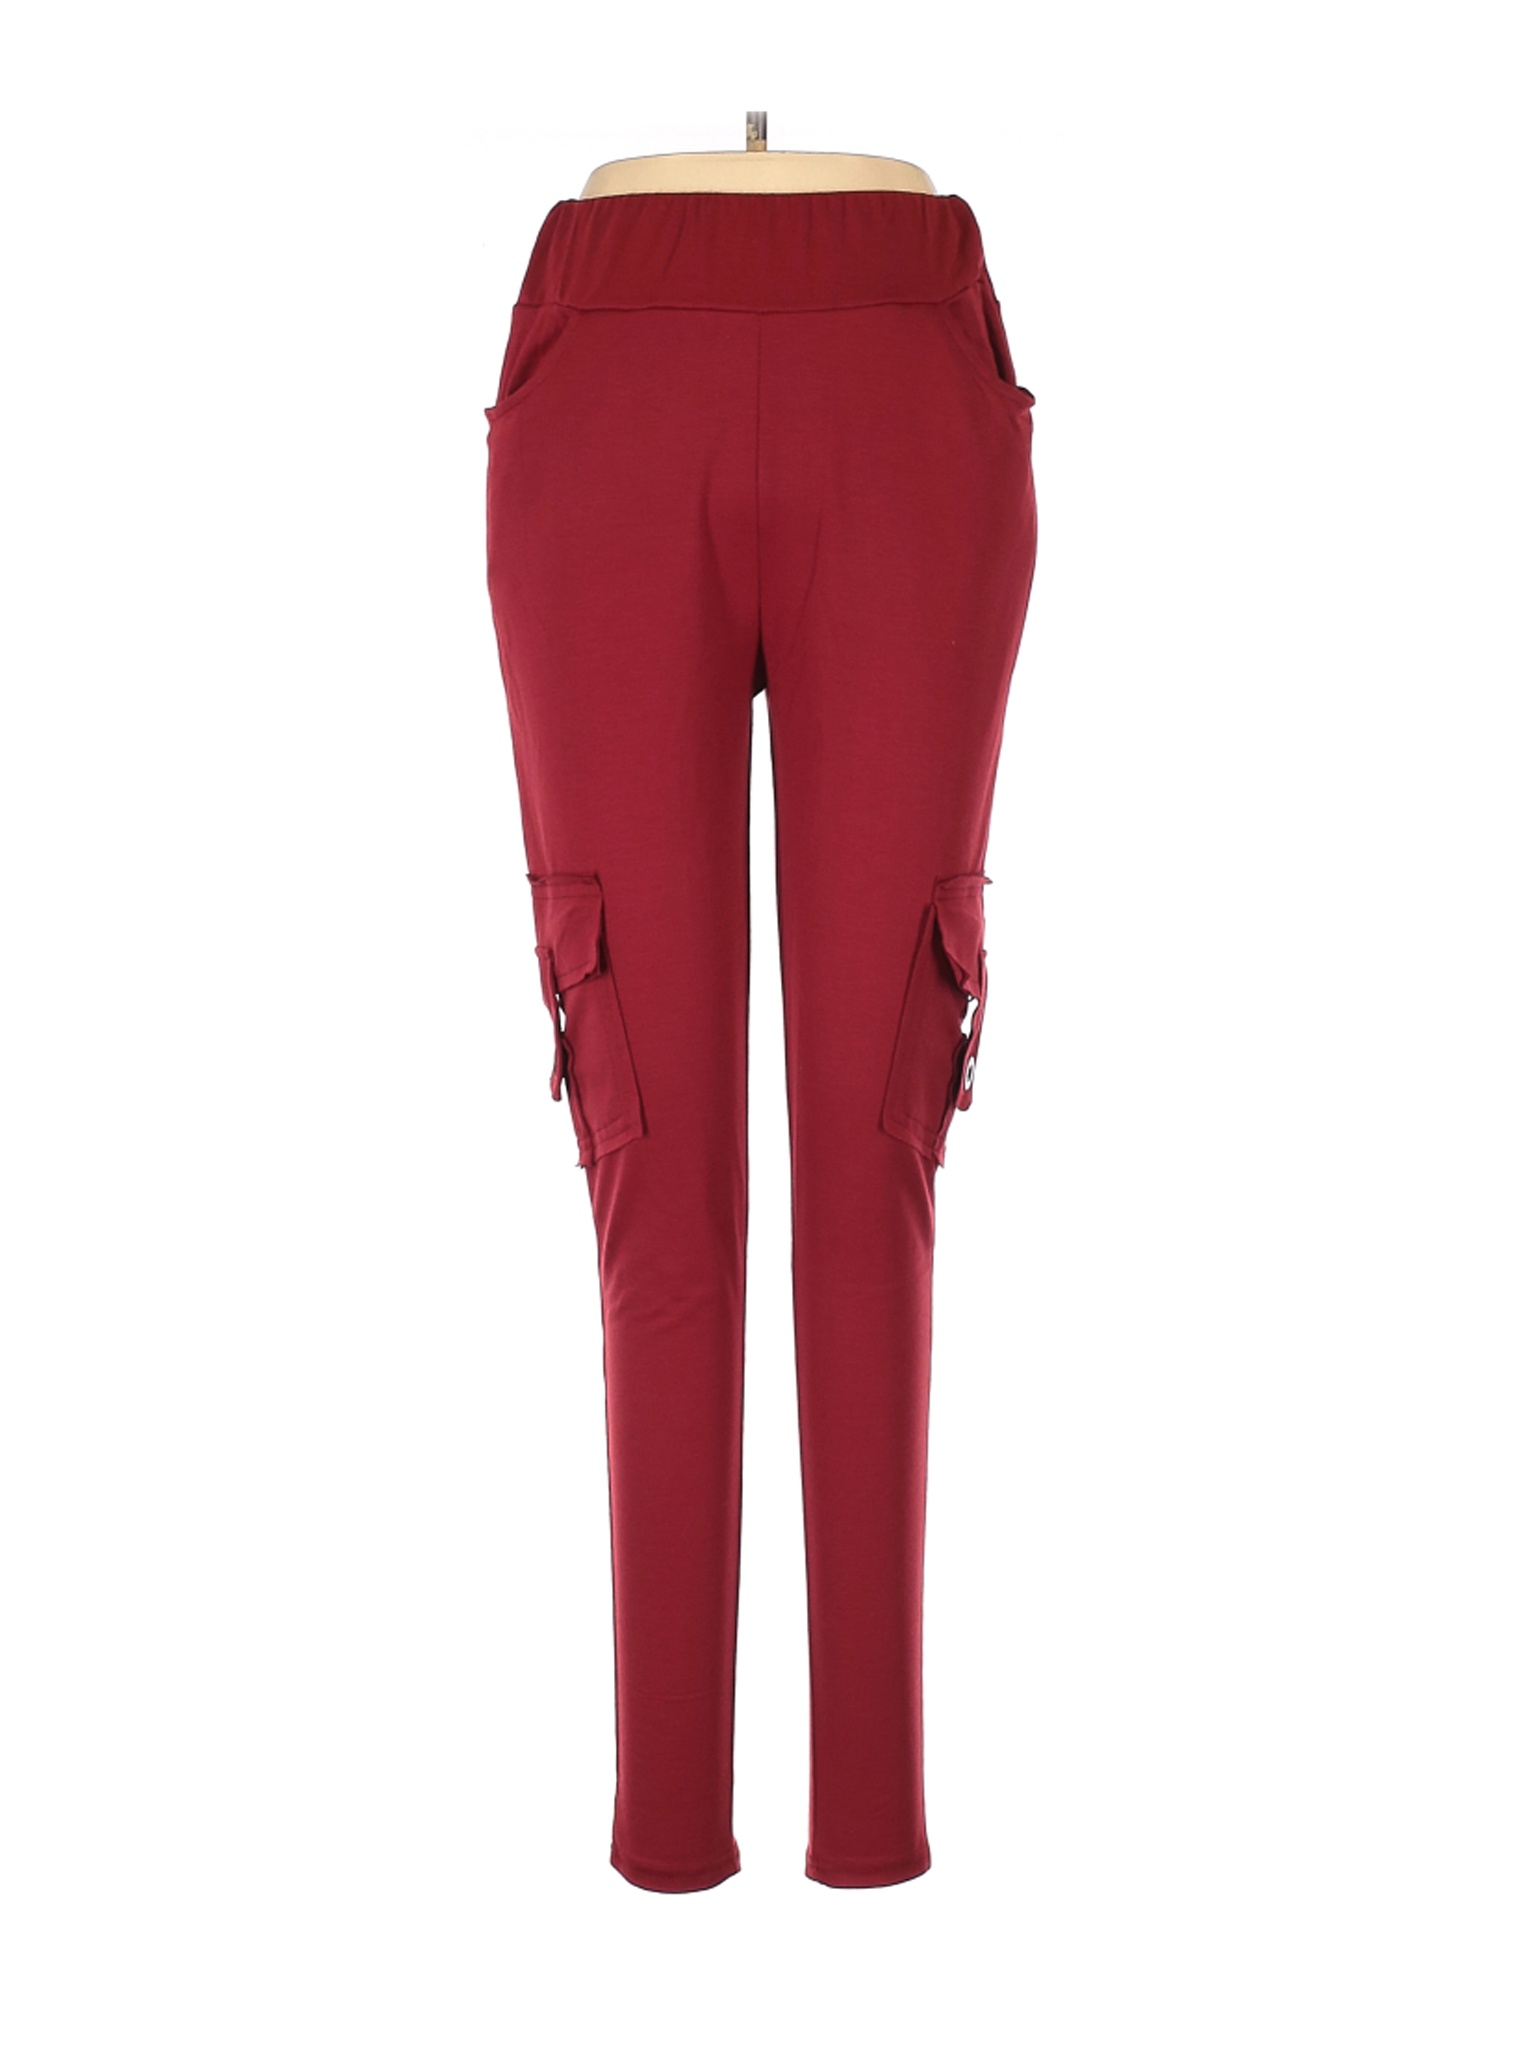 Unbranded Women Red Cargo Pants S | eBay